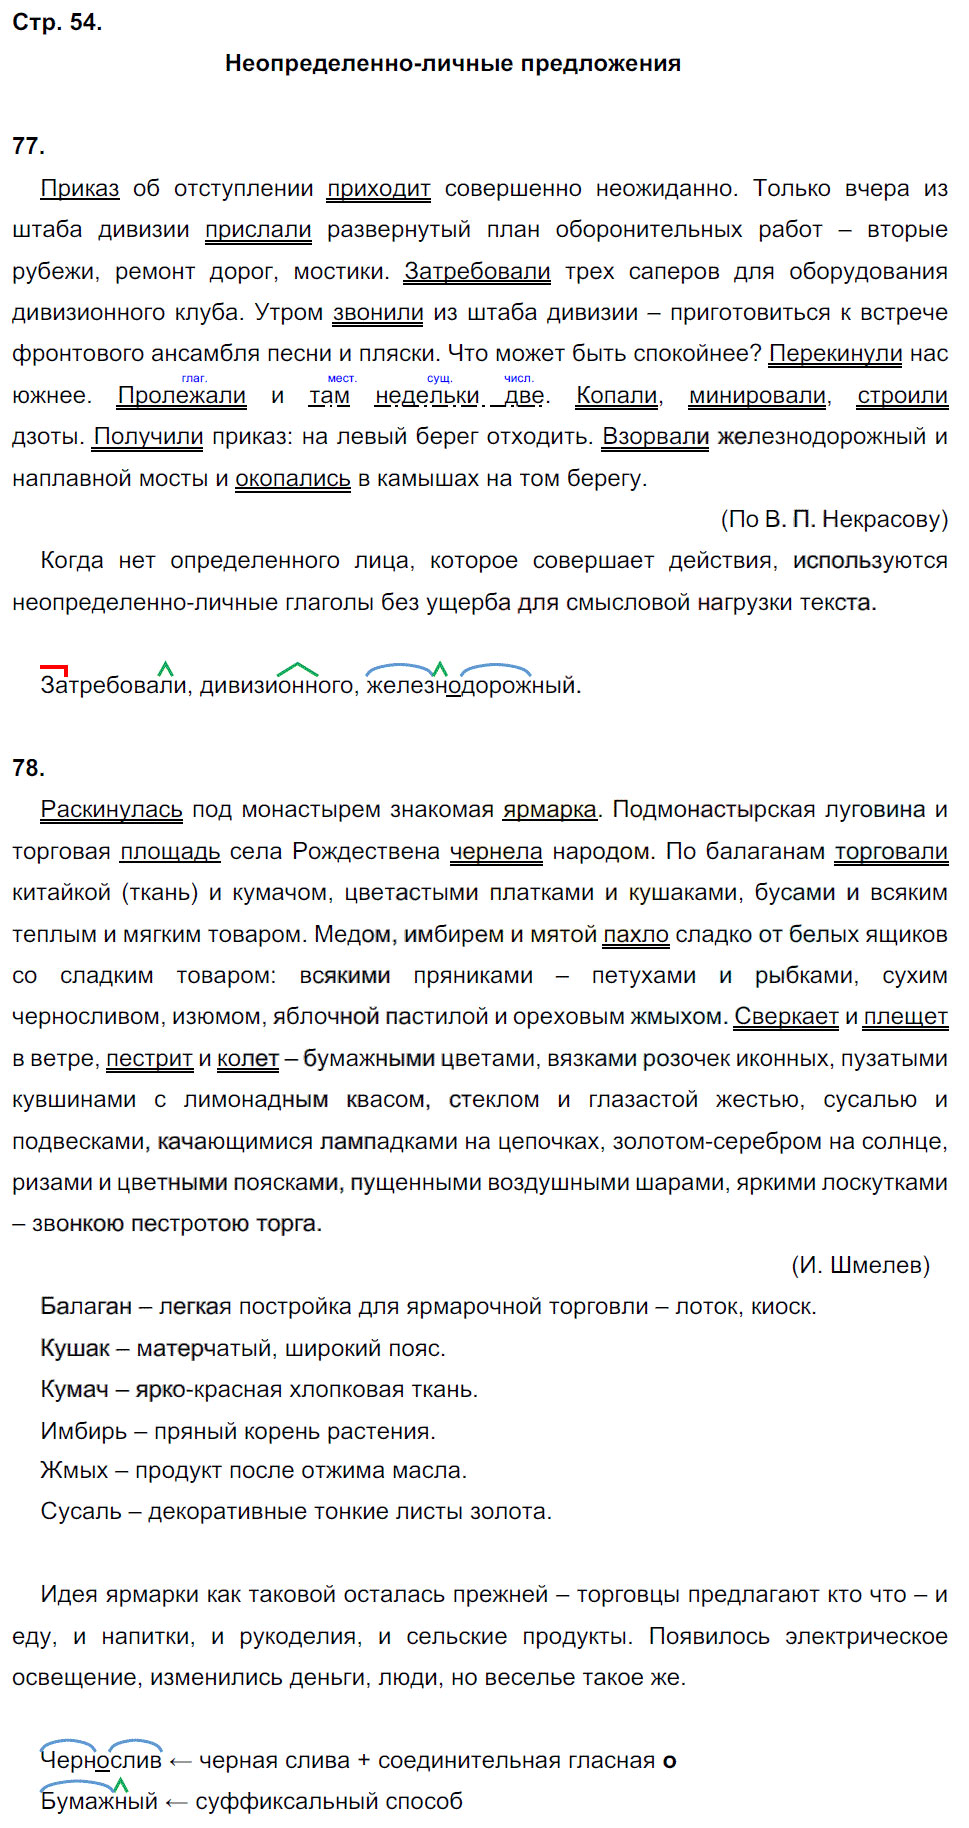 гдз 8 класс рабочая тетрадь страница 54 русский язык Кулаева